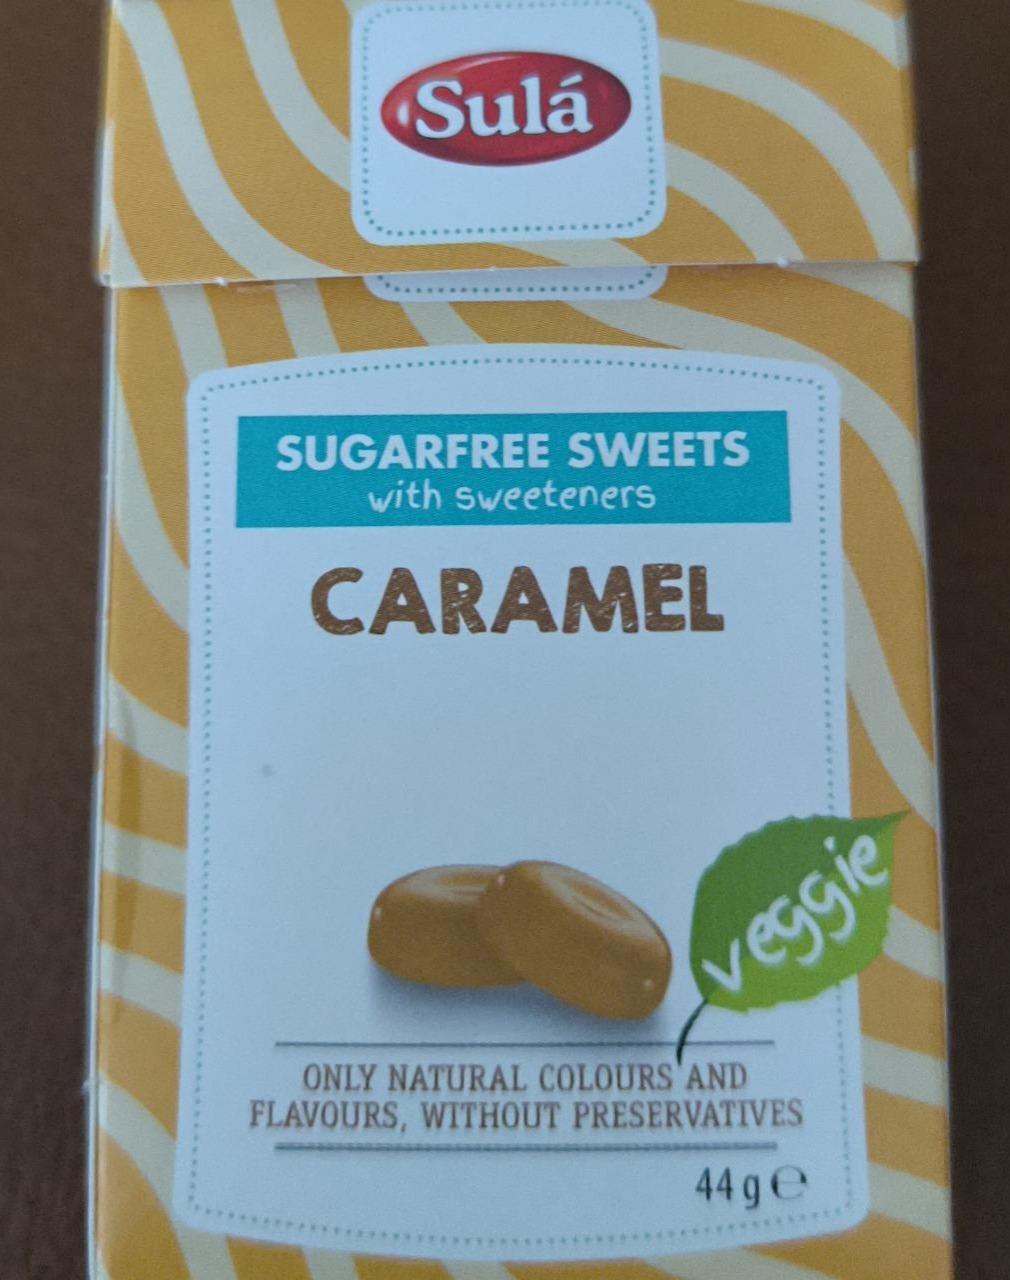 Fotografie - Sugarfree sweets Caramel Sulá